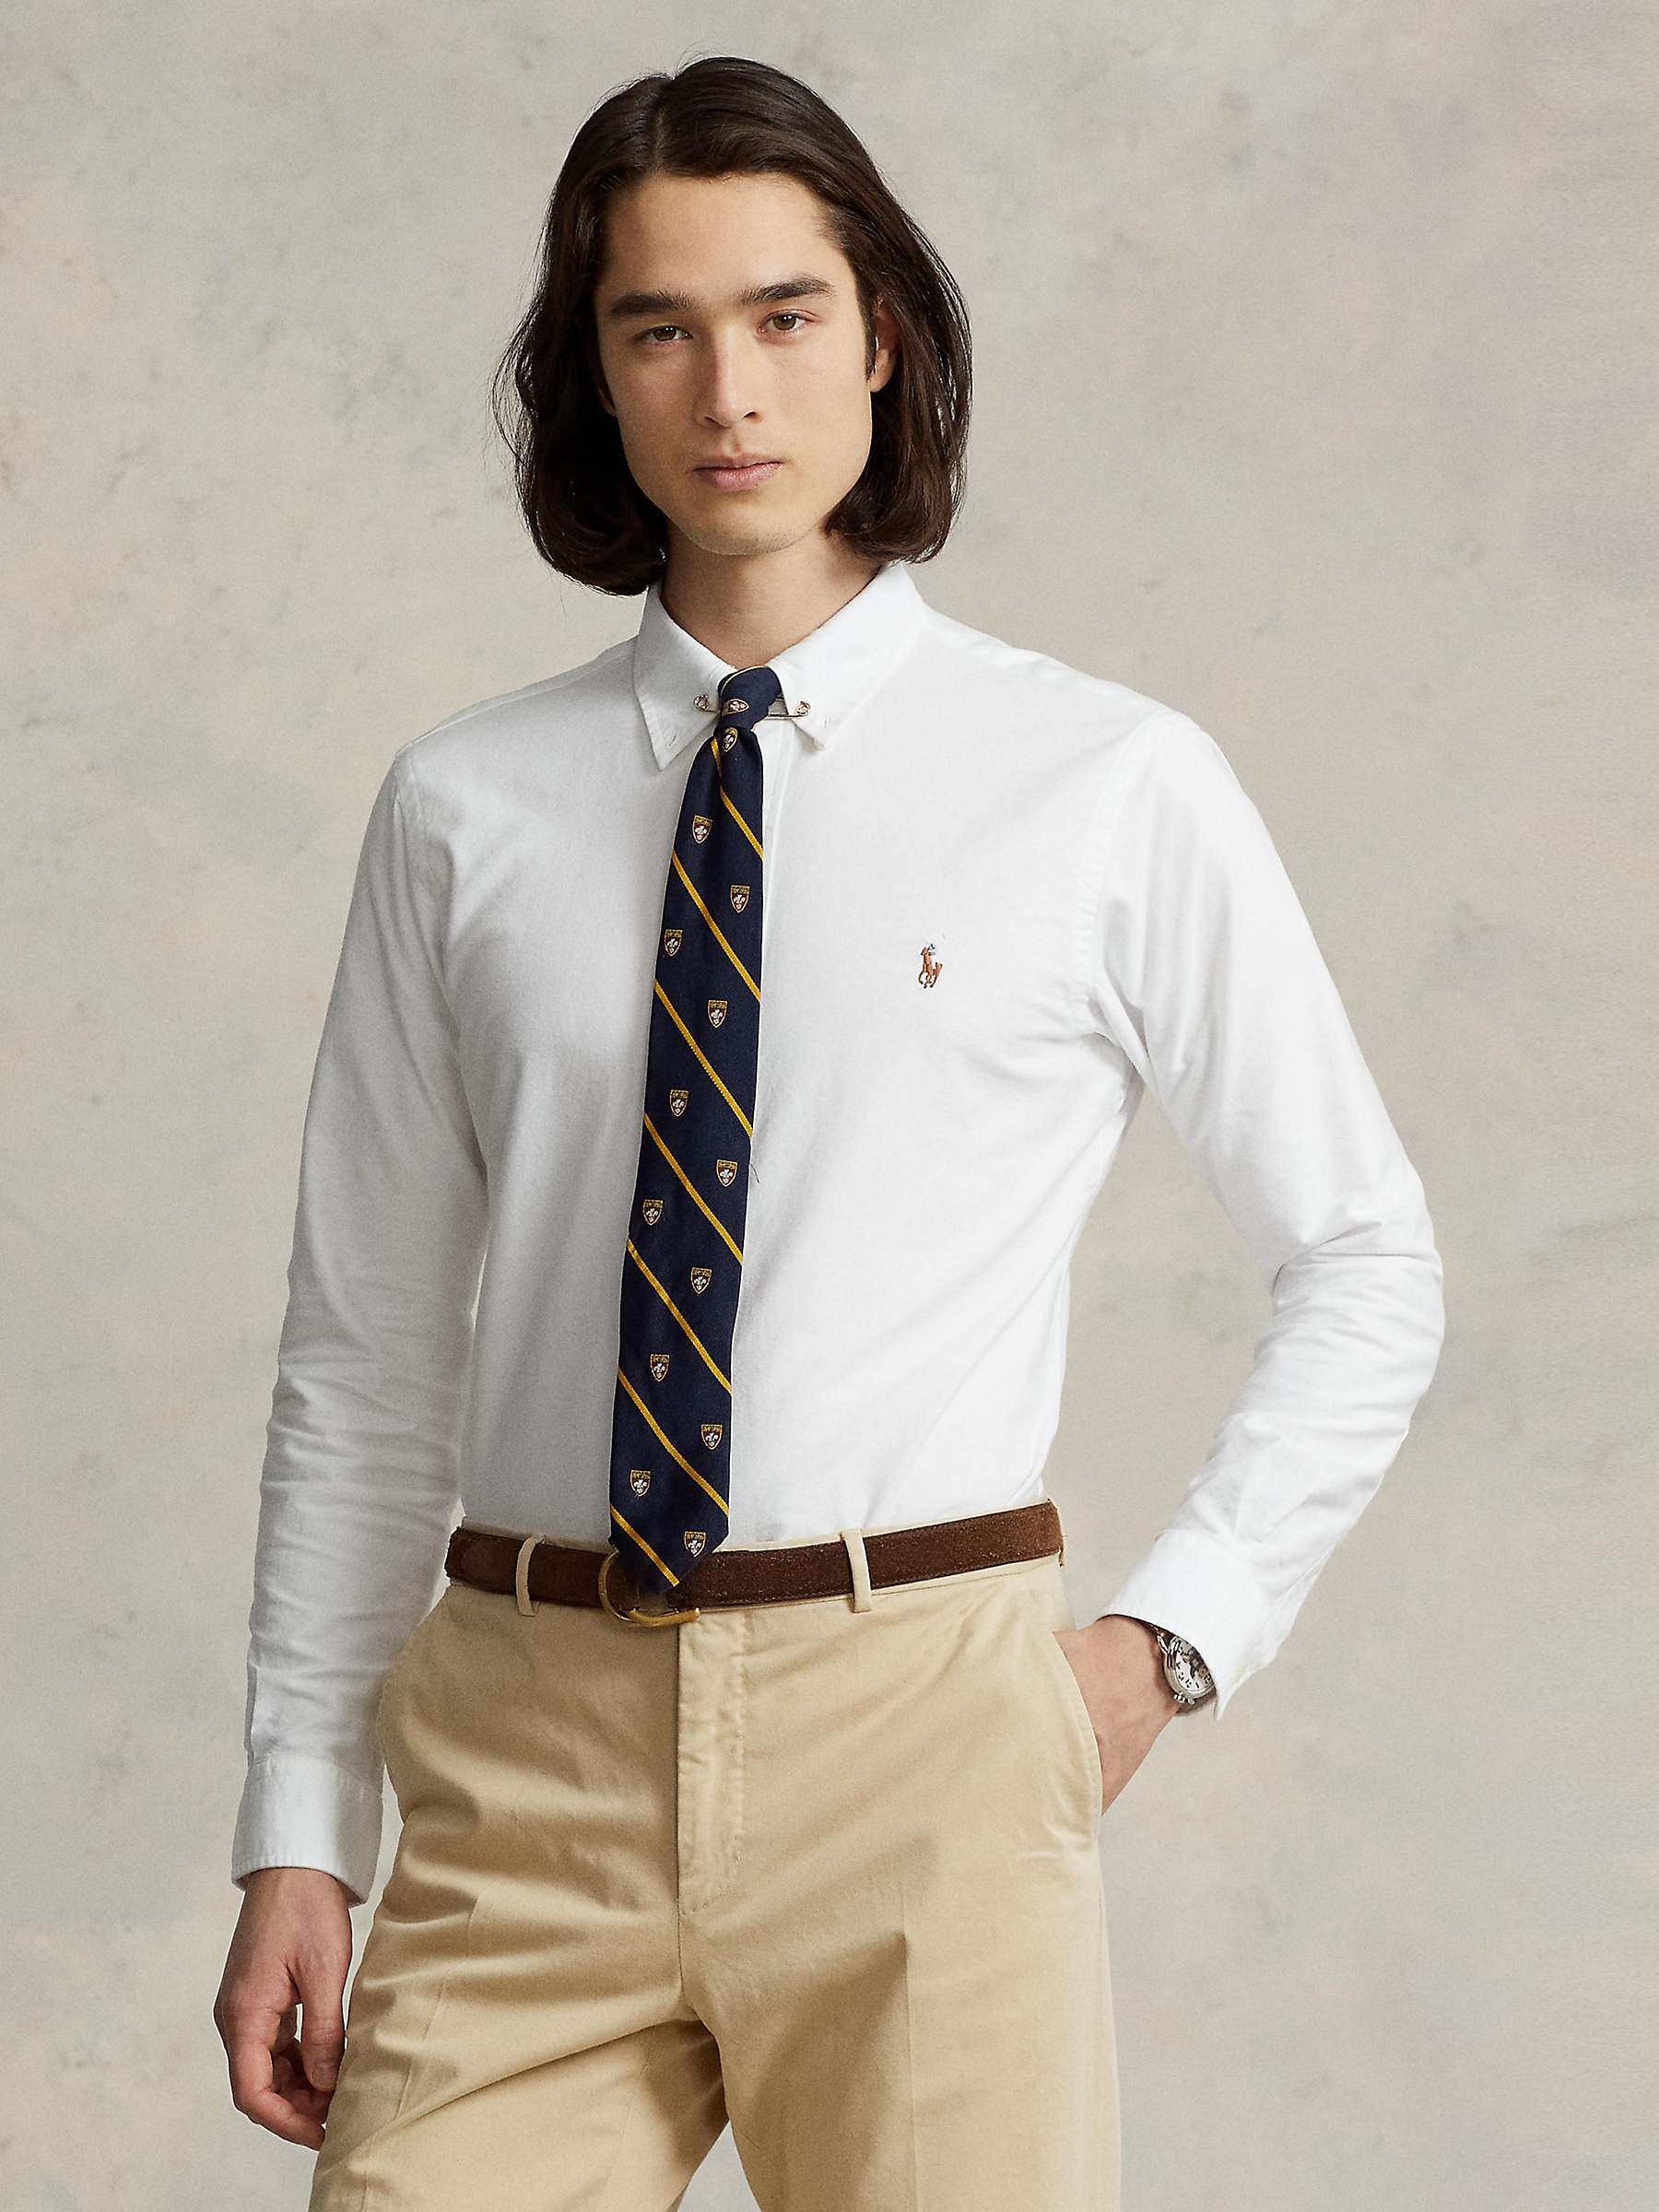 Buy Polo Ralph Lauren Custom Fit Oxford Shirt Online at johnlewis.com